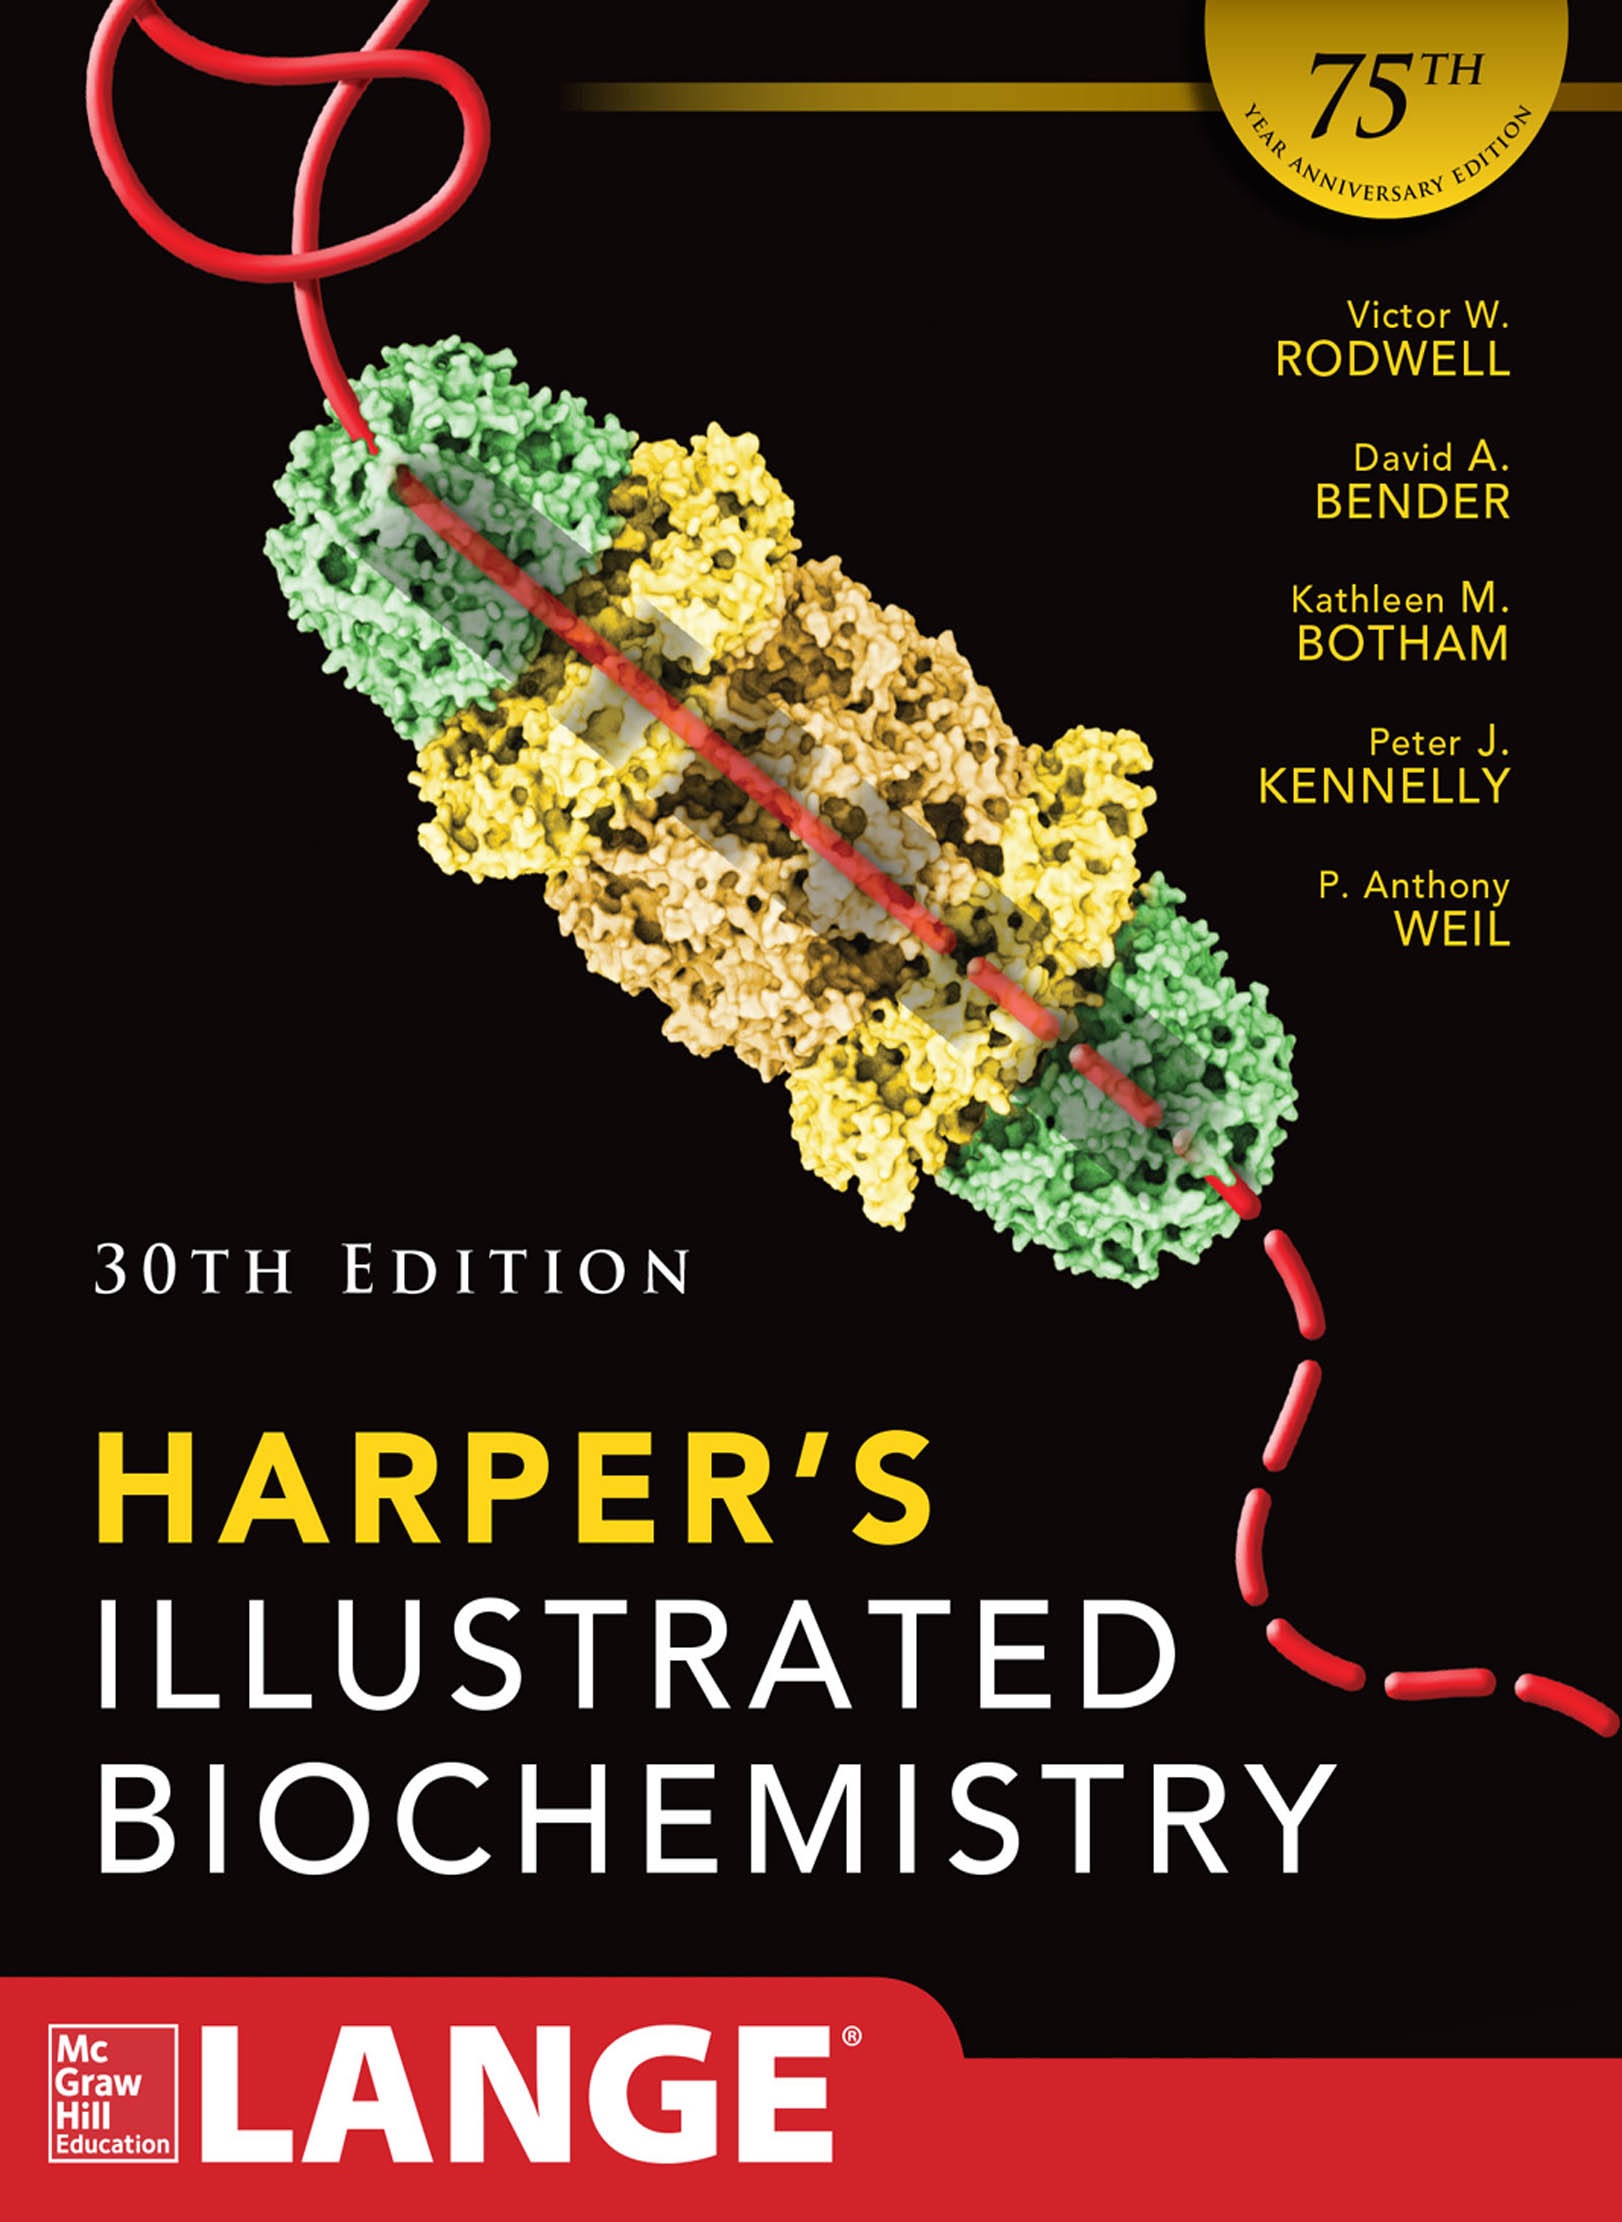 Harper’s Illustrated Biochemistry Thirteen Edition pdf book free download